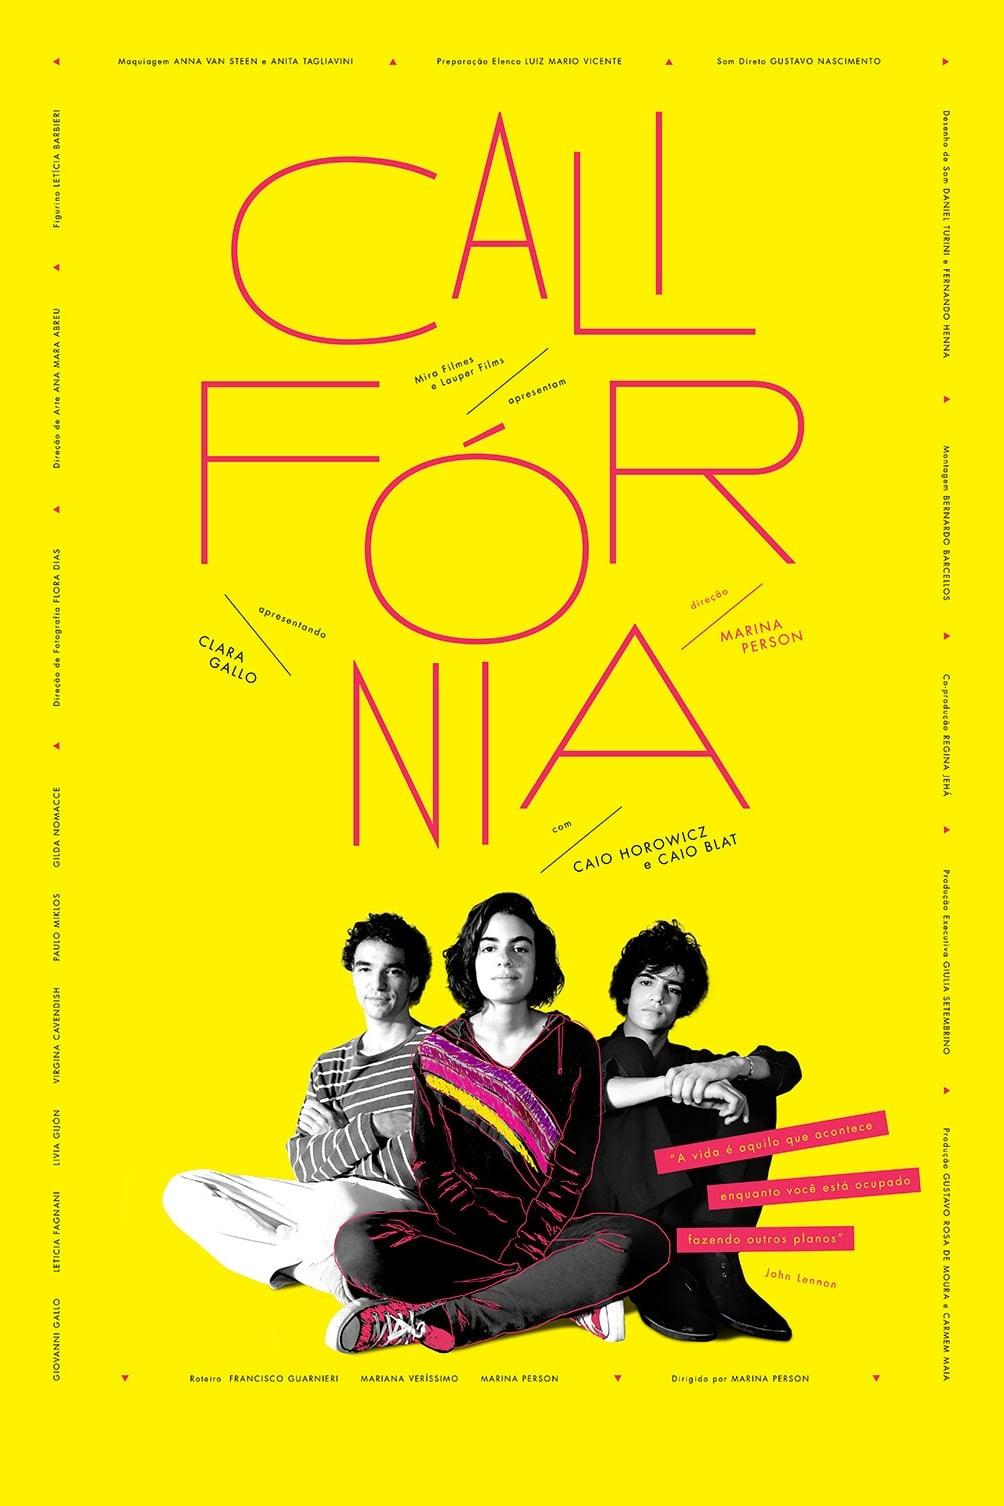 Califórnia poster